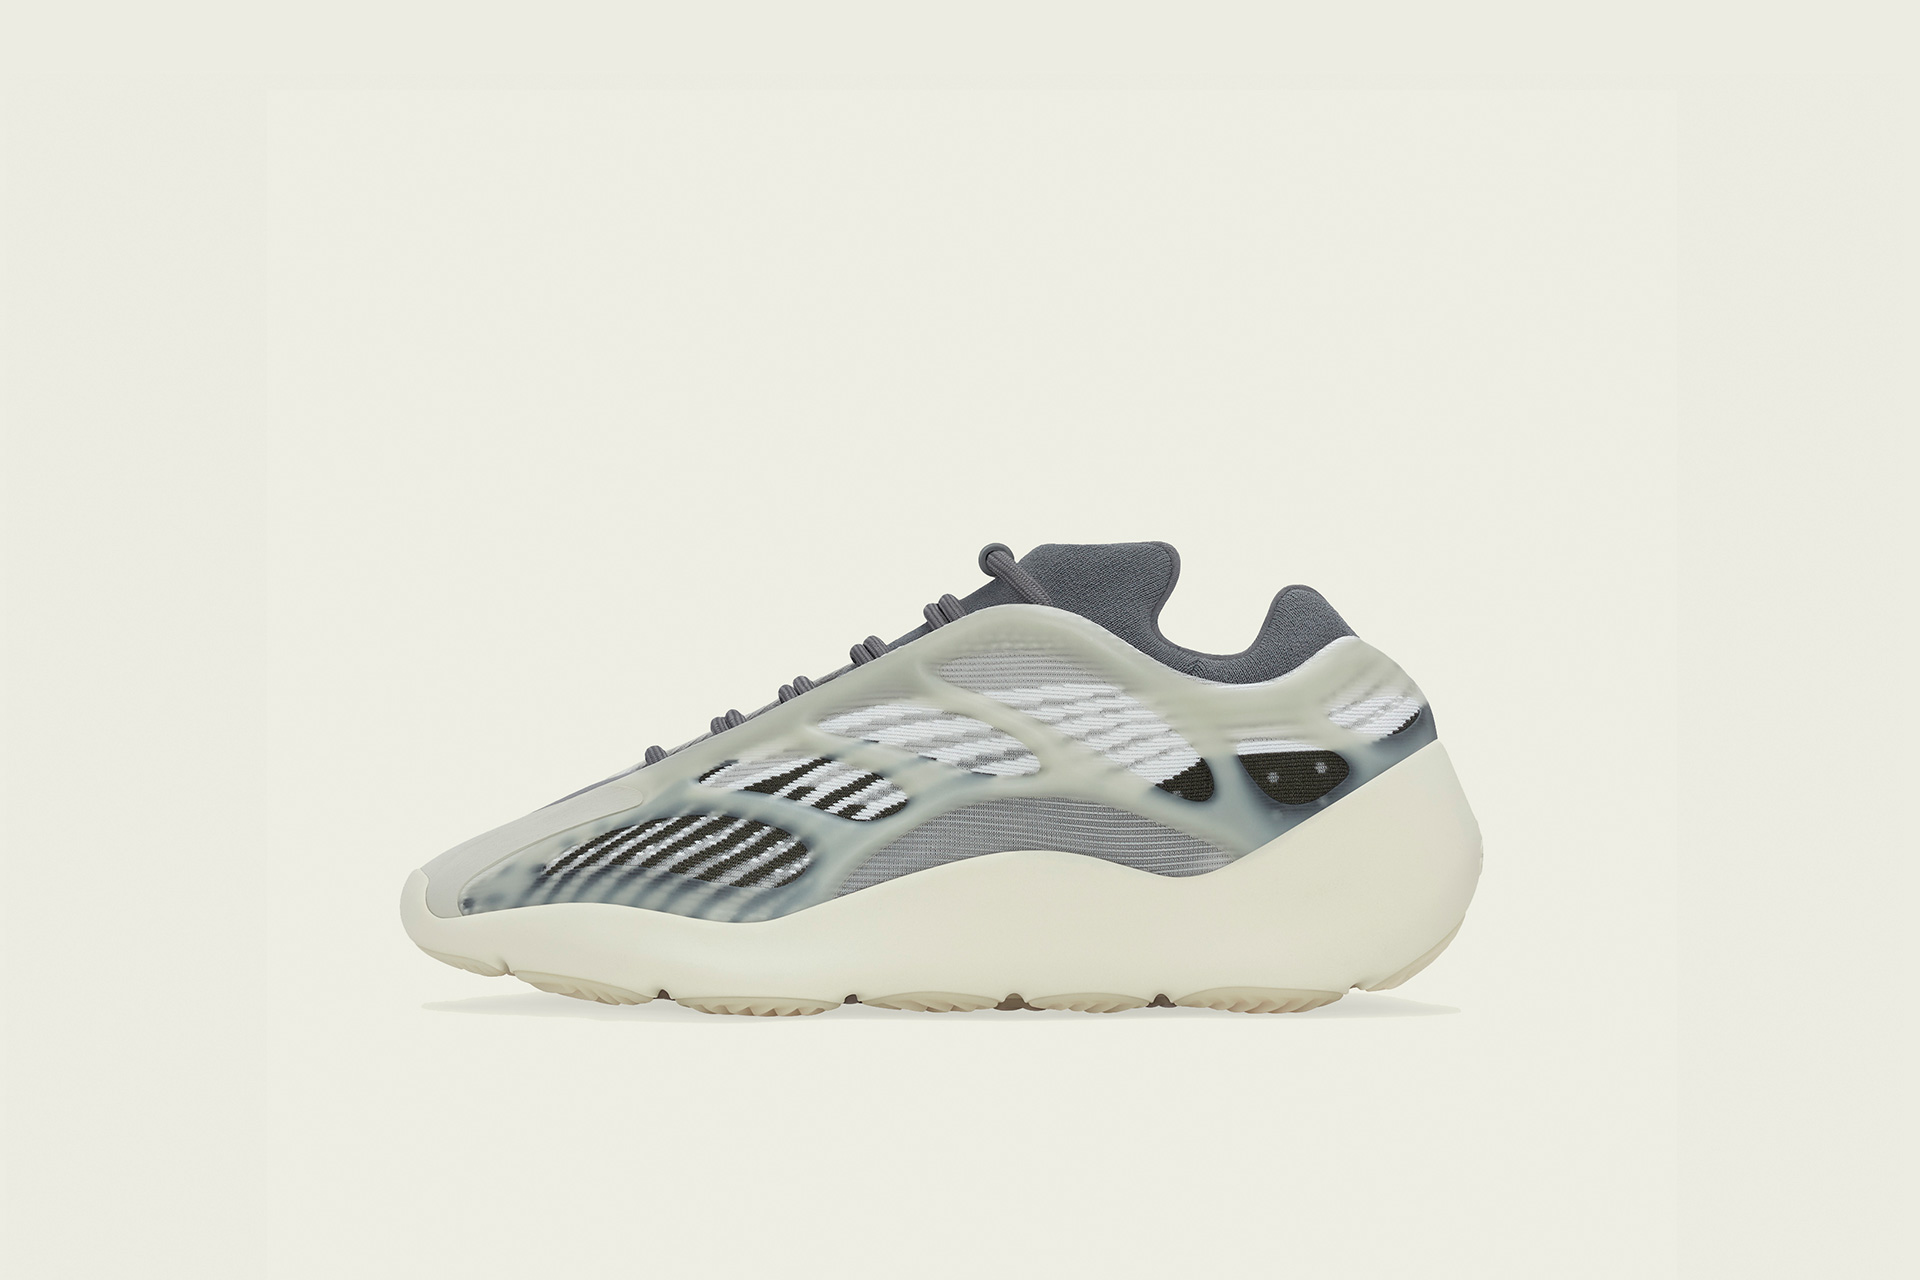 adidas Yeezy eva yeezy 700 V3, Fade Salt - Footshop - Releases